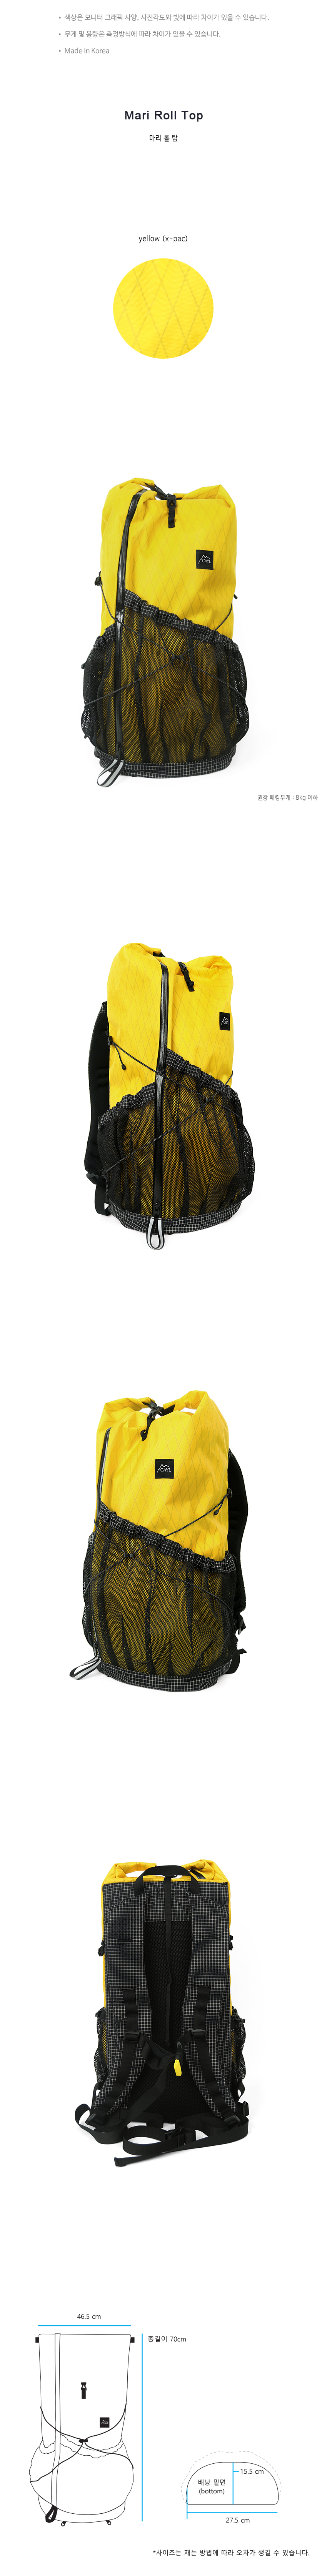 CAYL Mari Roll Top - Xpac 32L 多功能防水健行包 Yellow/黃色